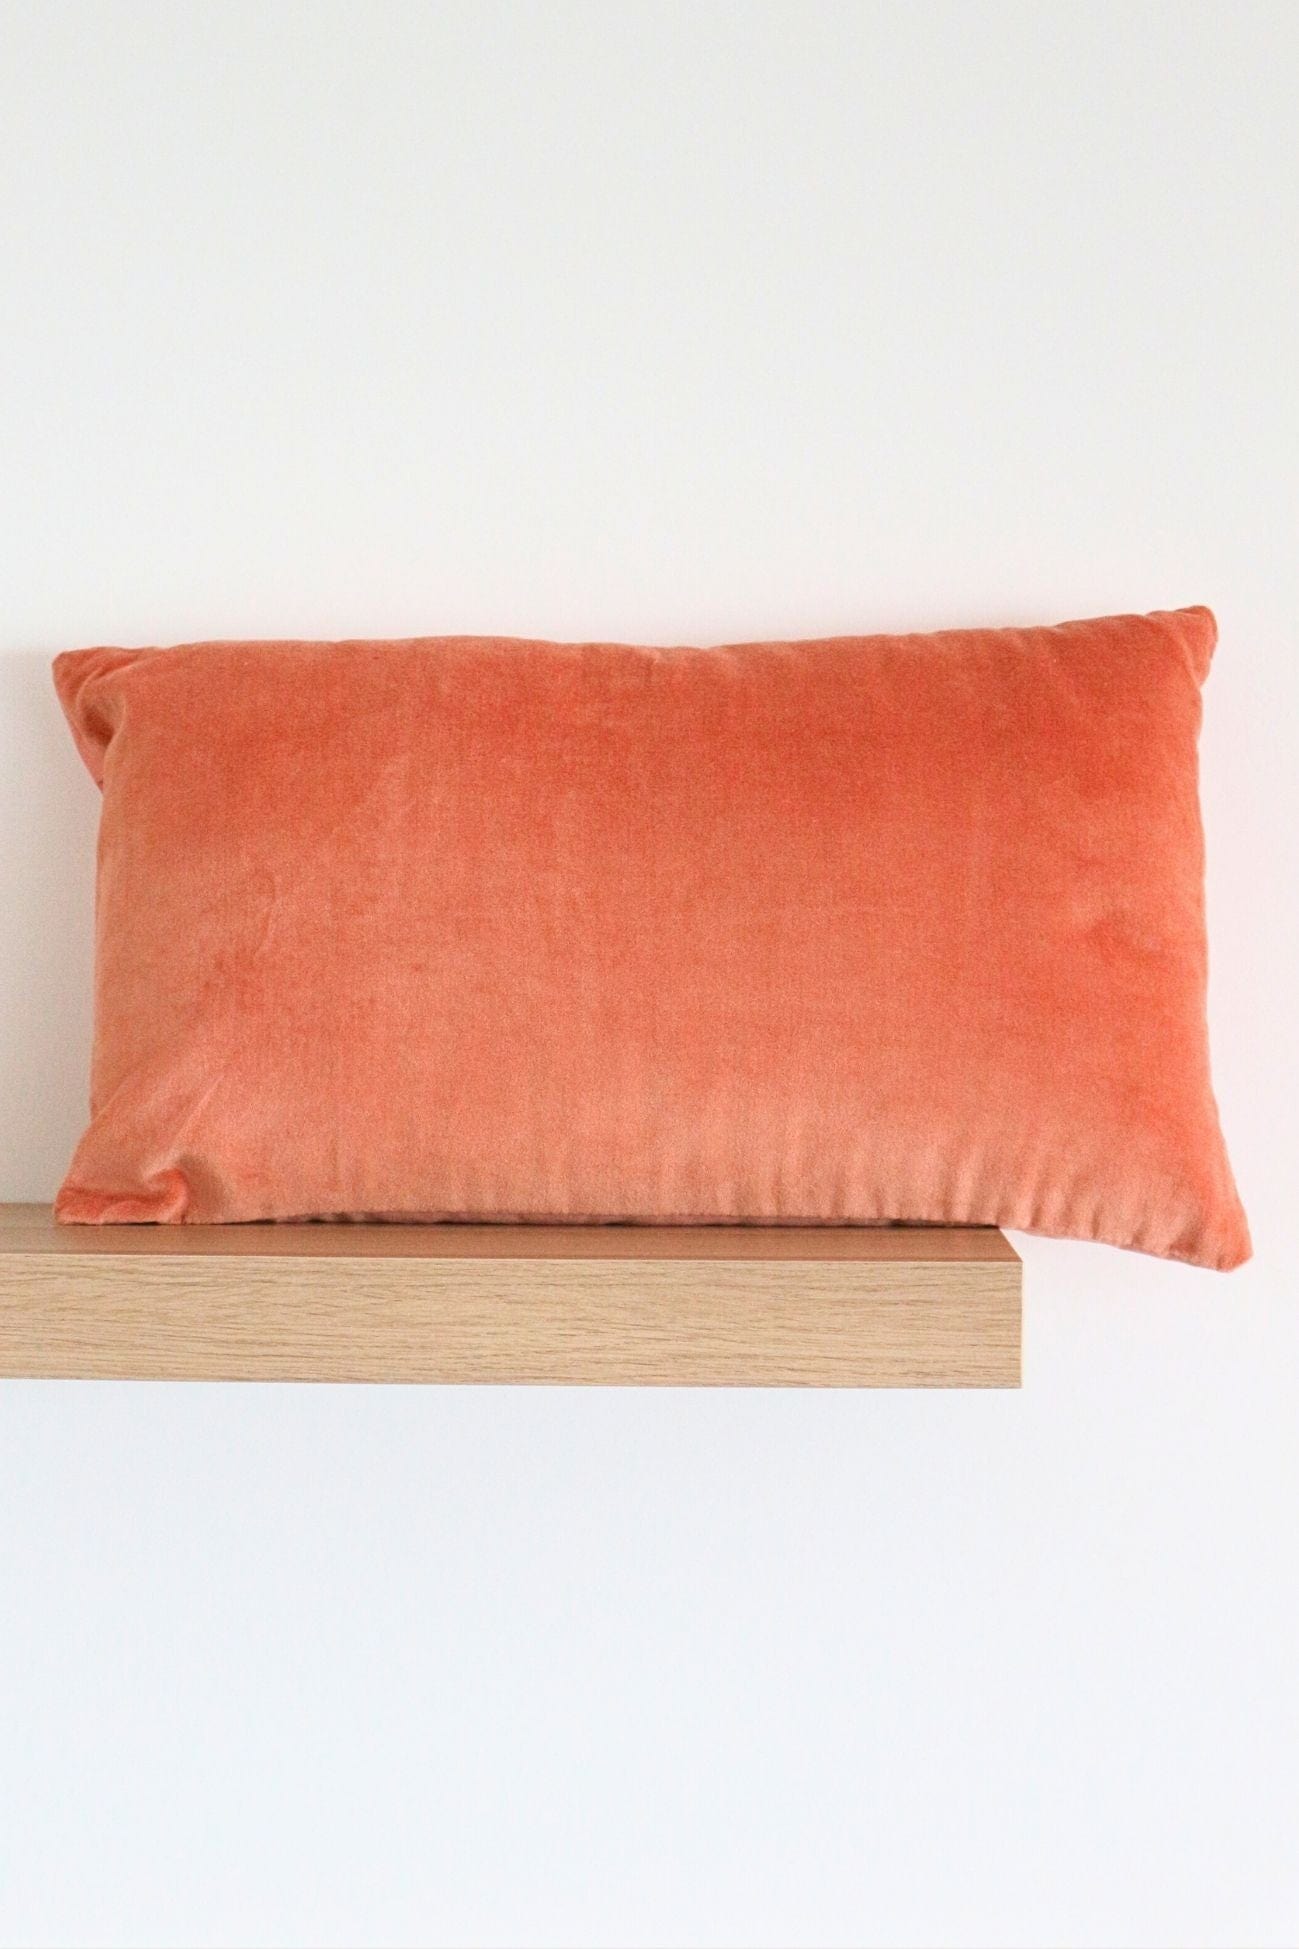 Novità Home Velvet Velvet - Cuscino arredo in velluto di cotone rosa salmone | Novità Home